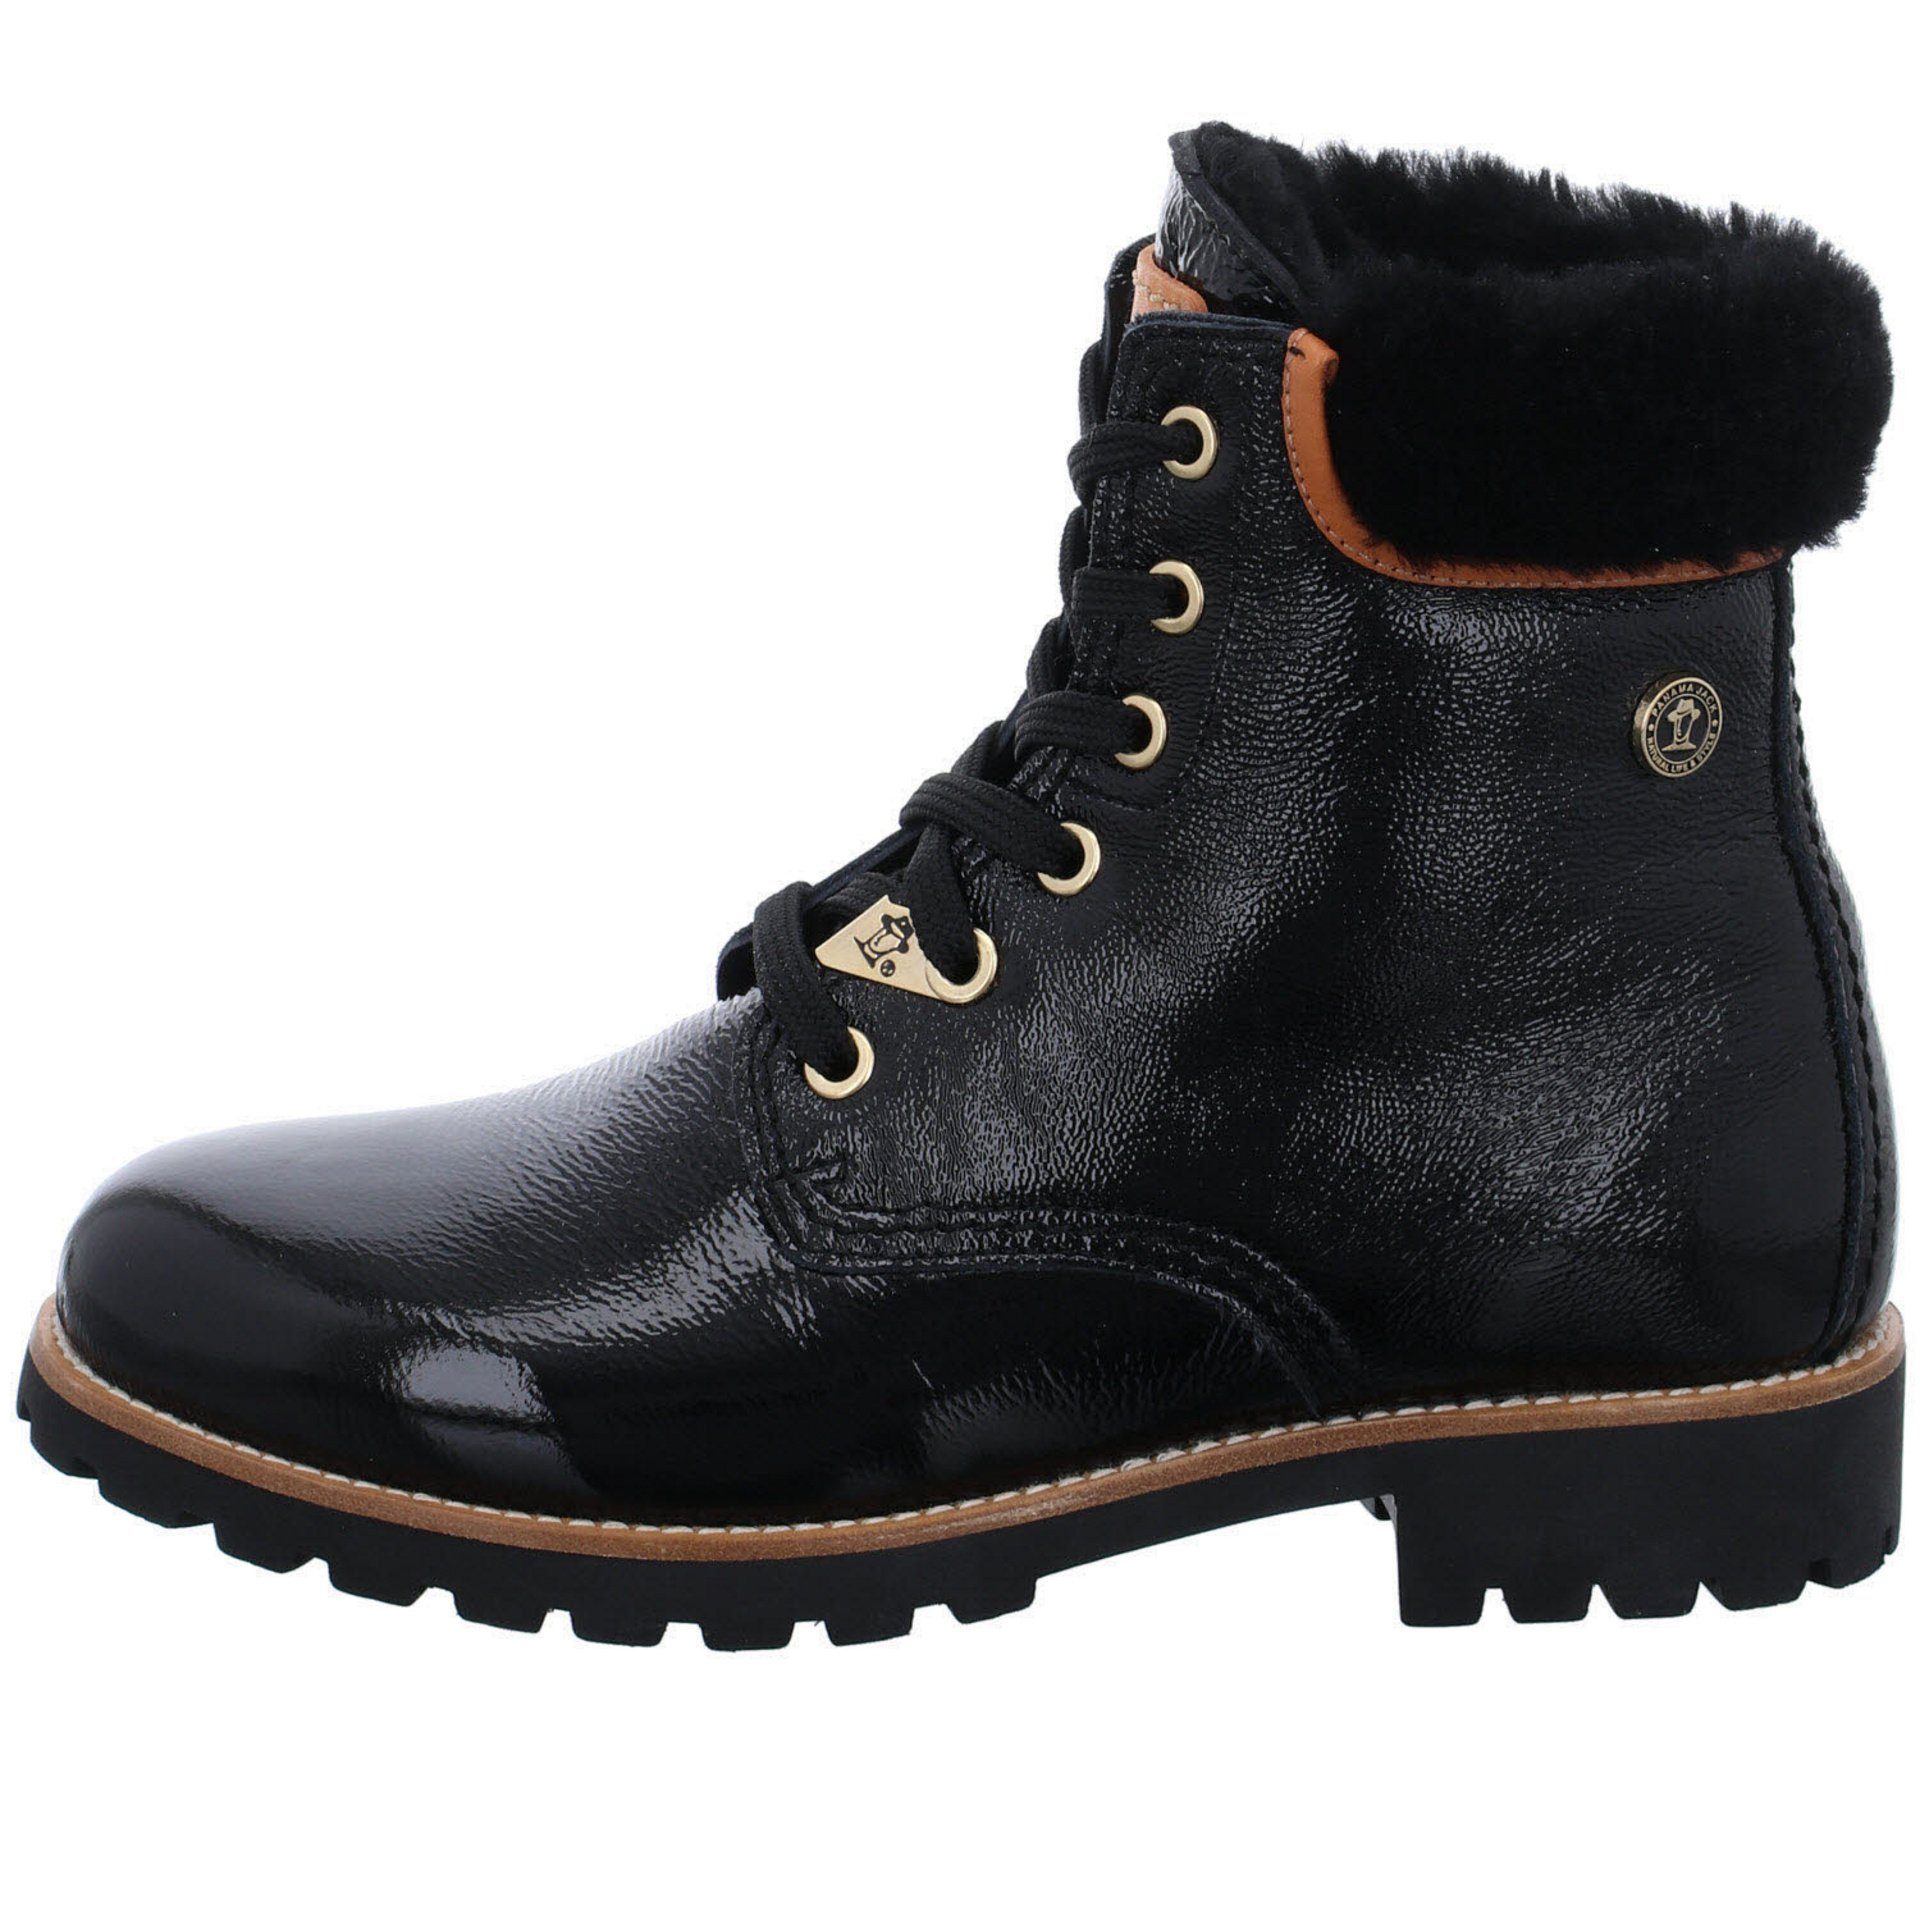 negro/black Stiefel B14 Jack Boots Stiefel Damen Schuhe Panama Lackleder Igloo Trav (16002106)